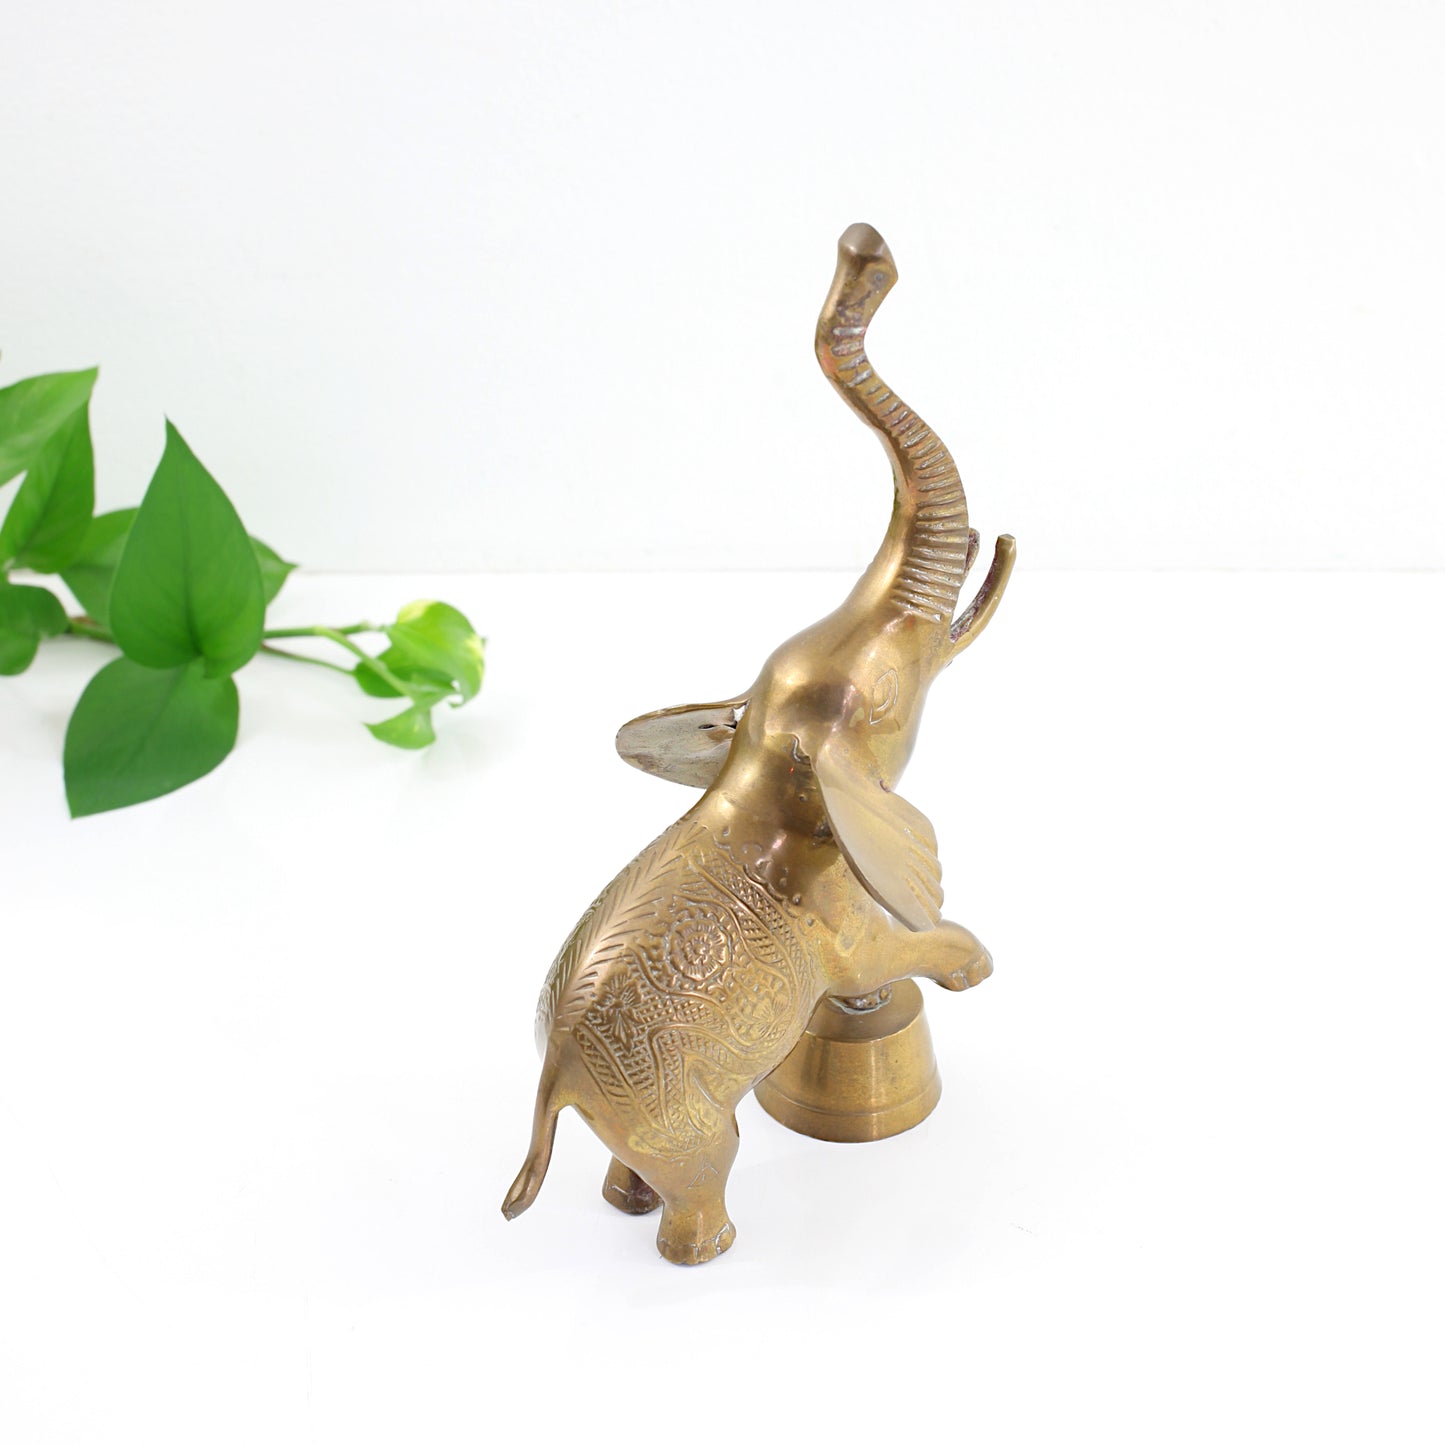 SOLD - Vintage Brass Elephant with Stamped Floral Motif